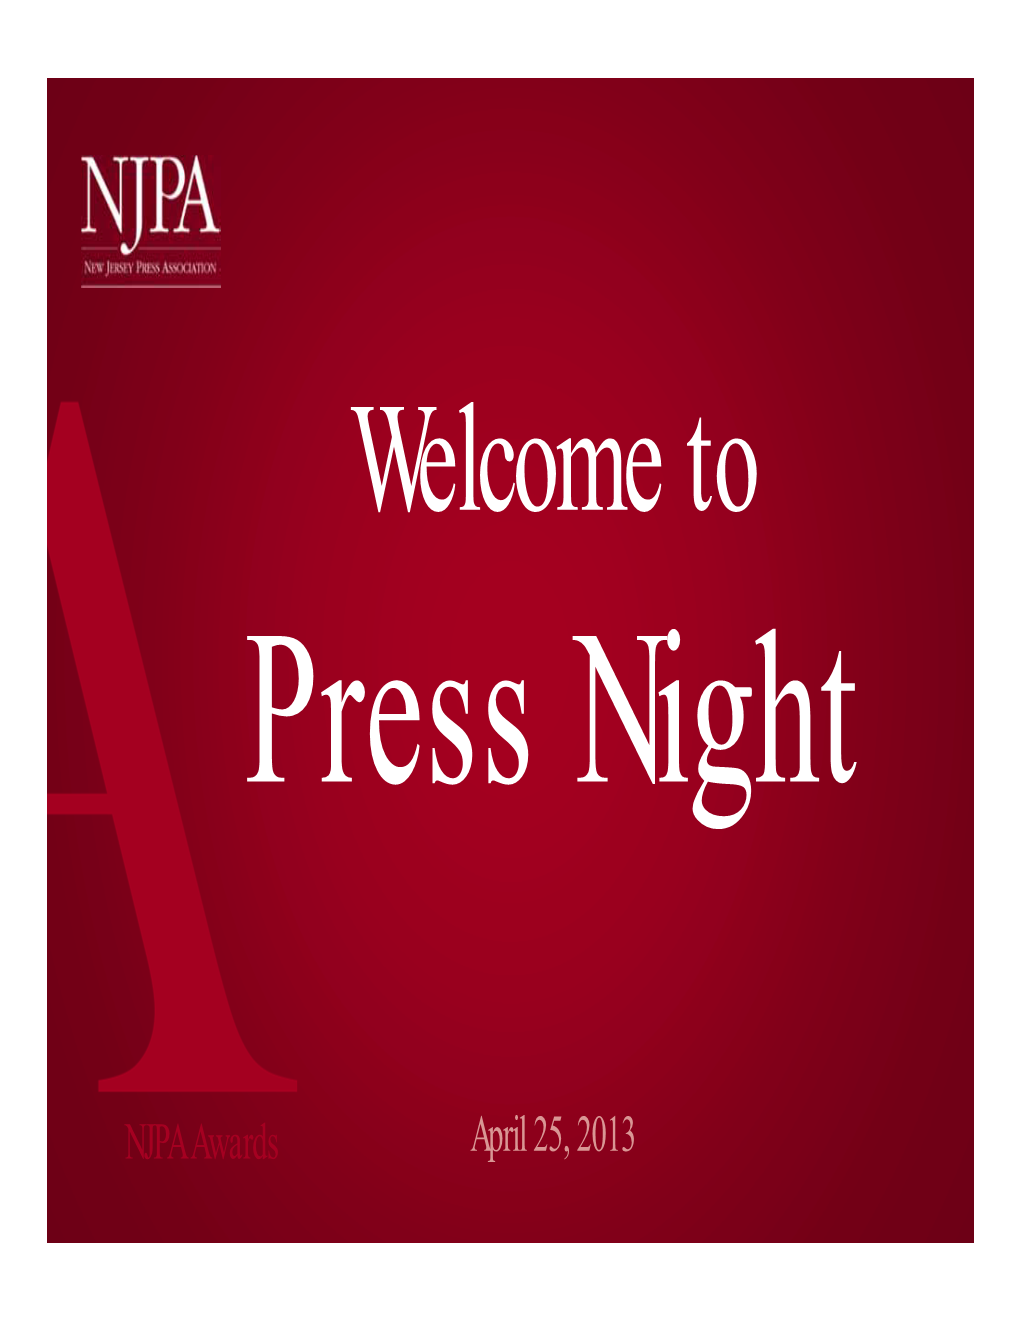 NJPA Awards April 25, 2013 Better Newspaper Contest Press Night 2012 Editorial & Photography Awards